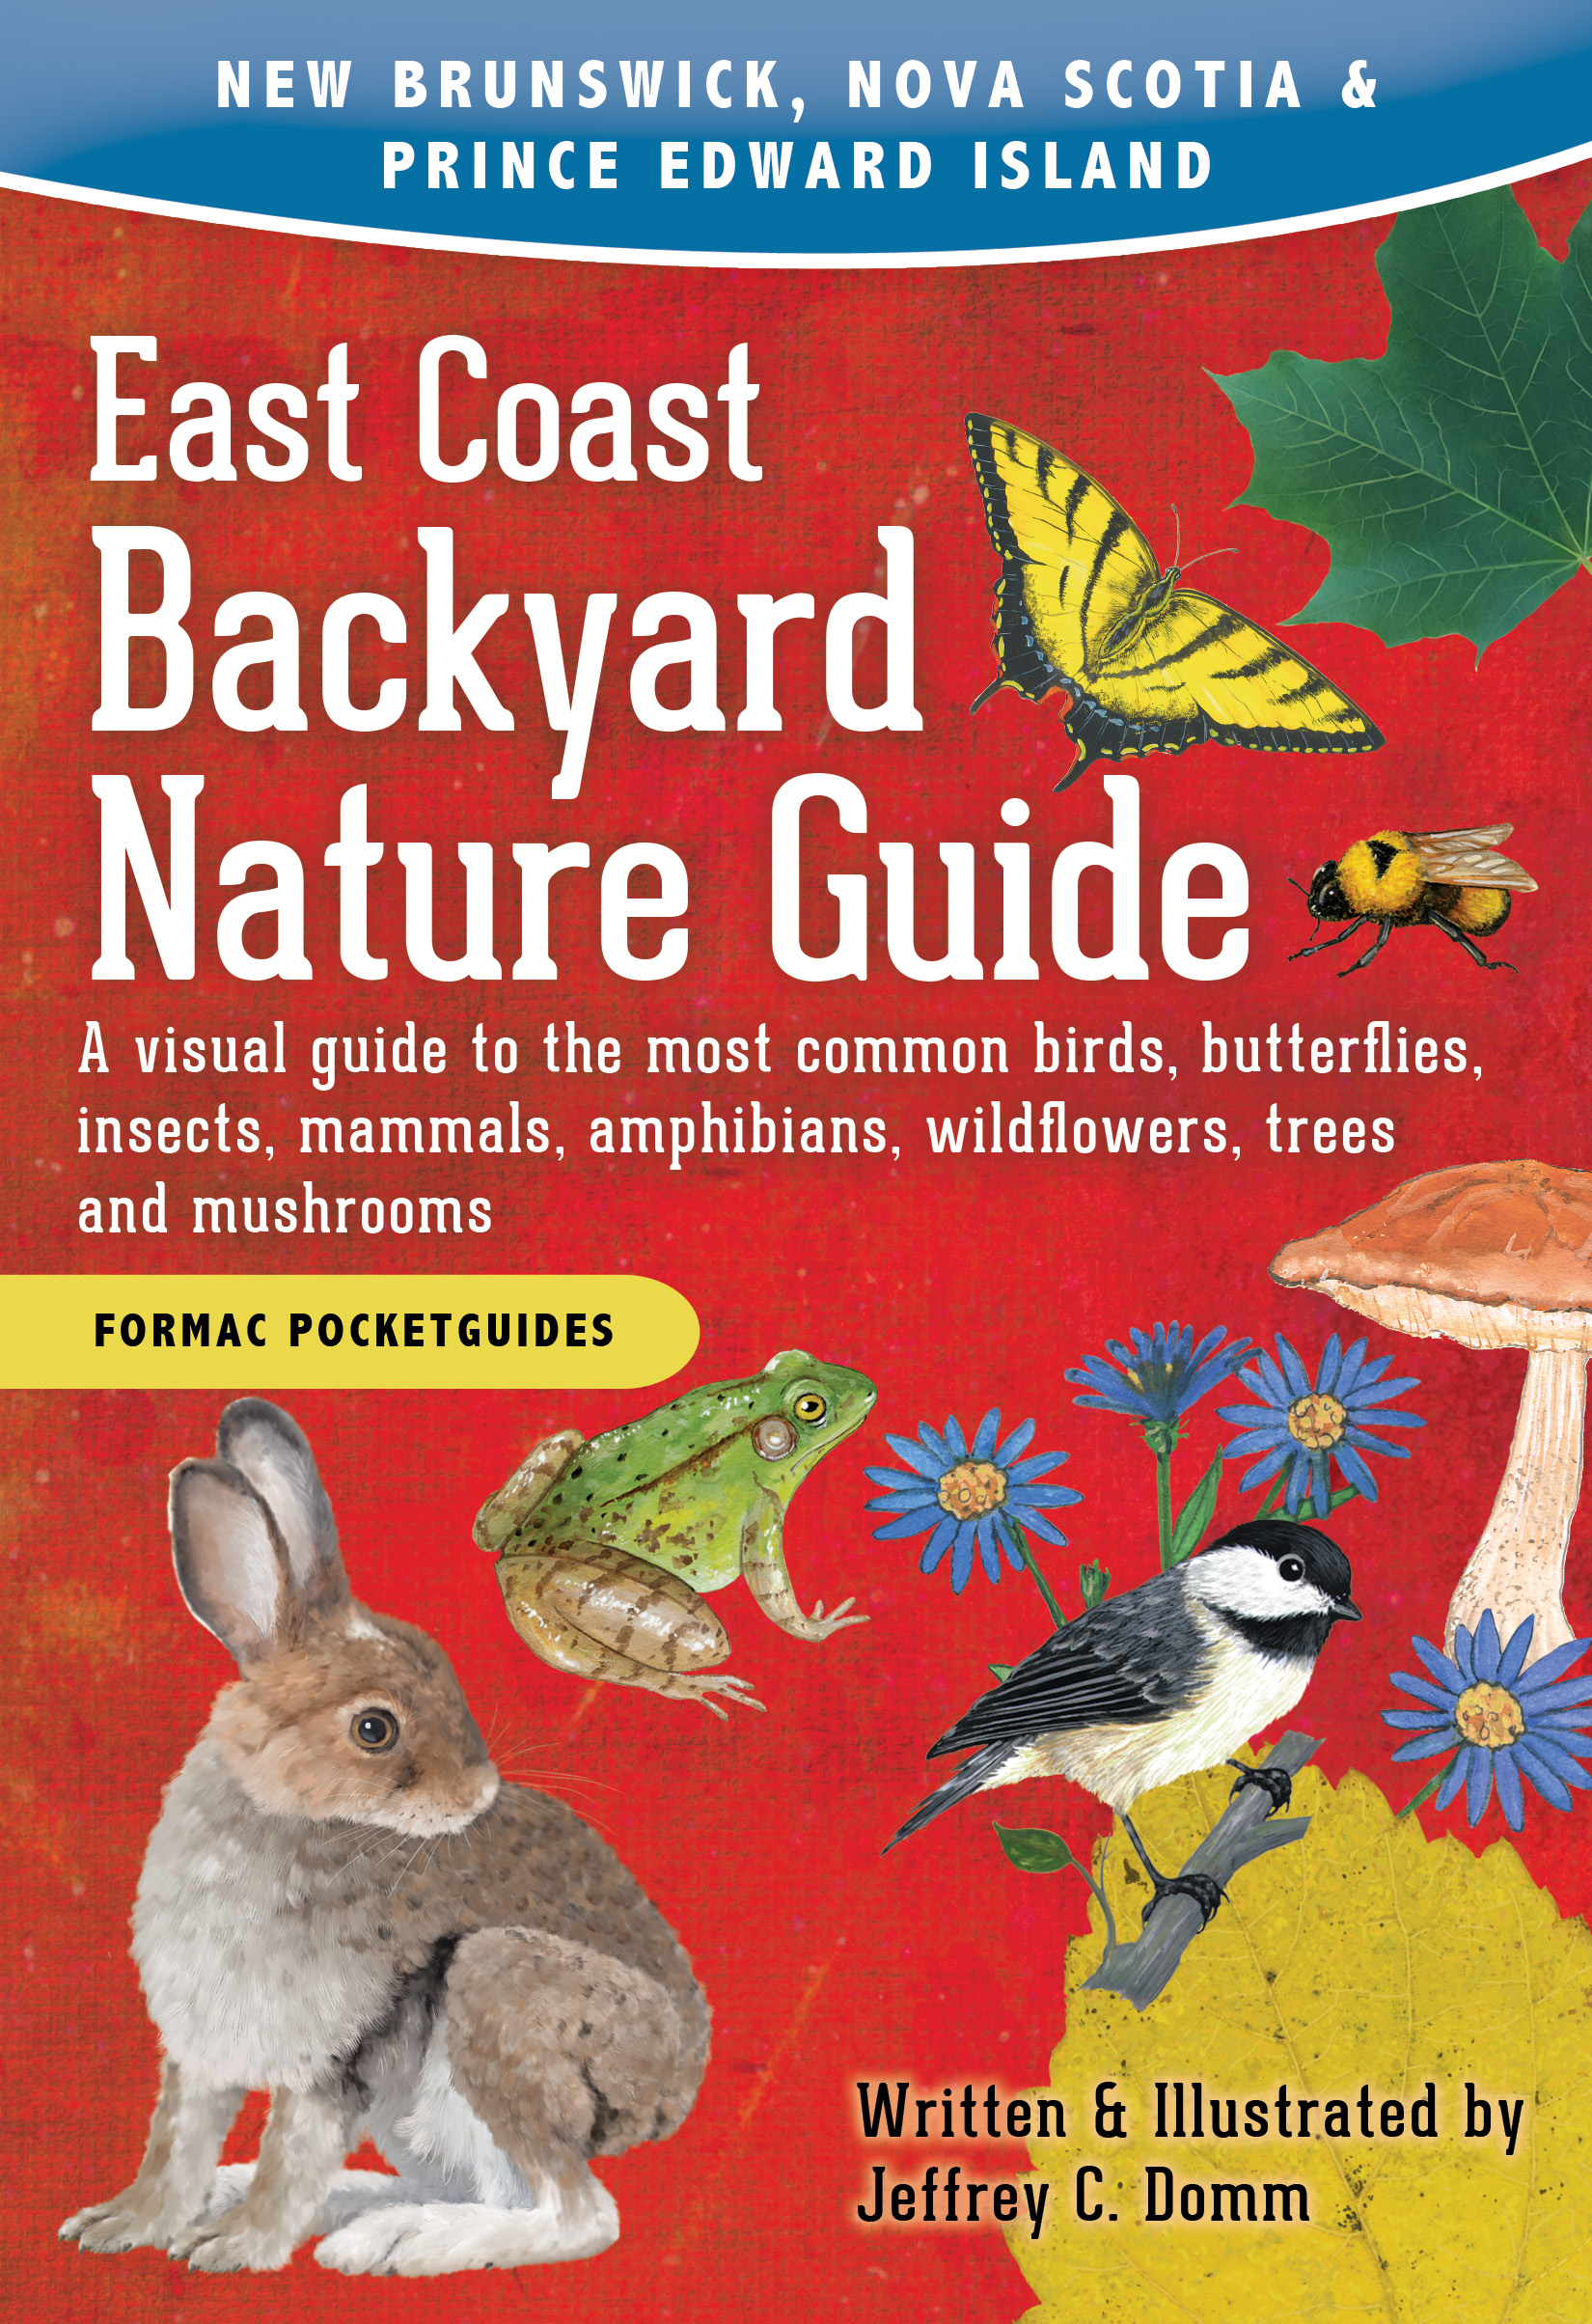 East Coast Backyard Nature Guide